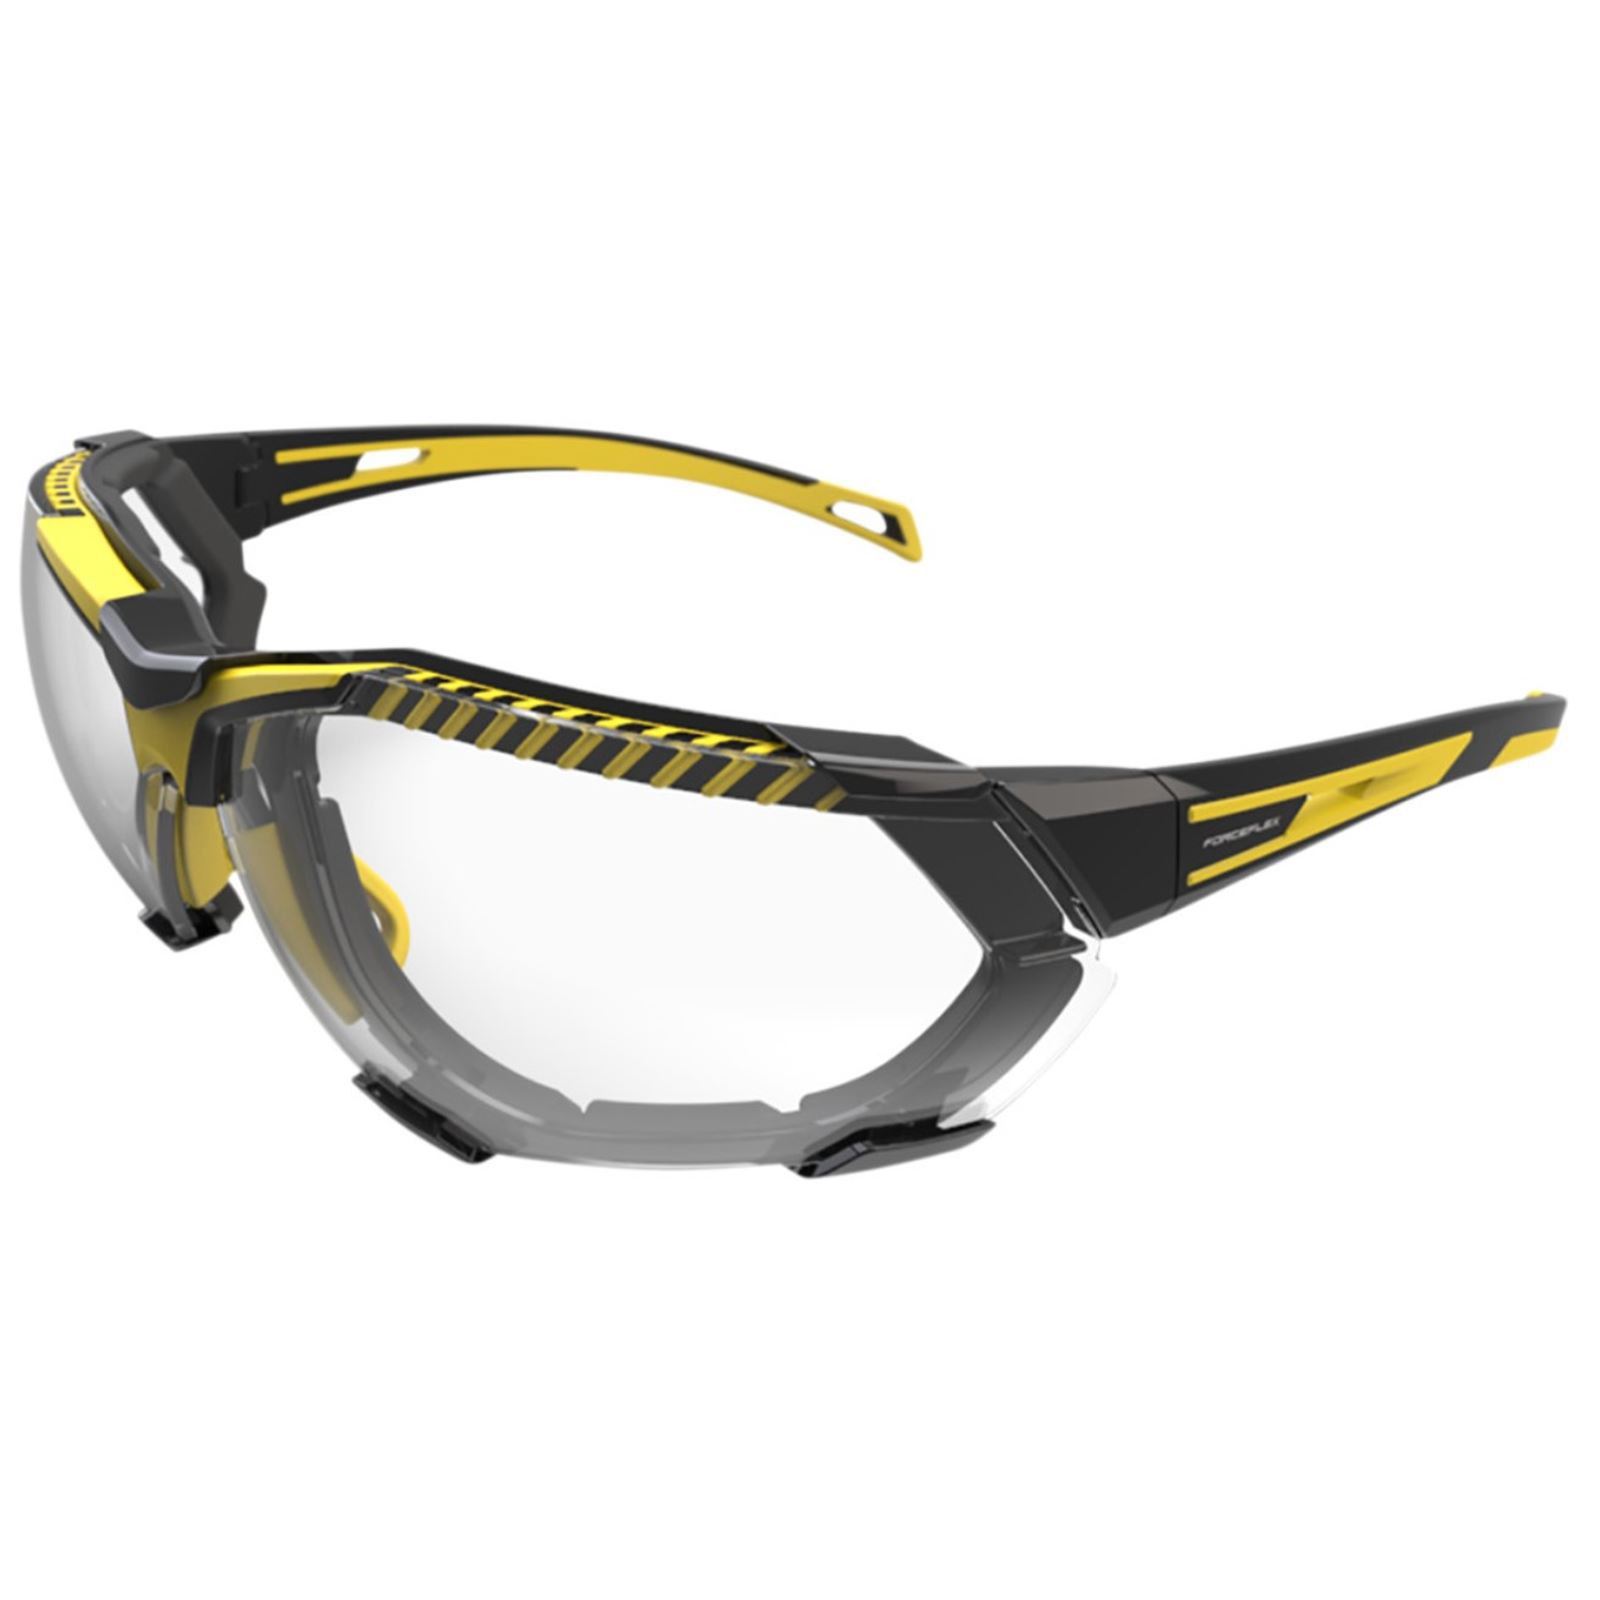 Forceflex FF4 Sunglasses - Foam - Black/Yellow - Clear